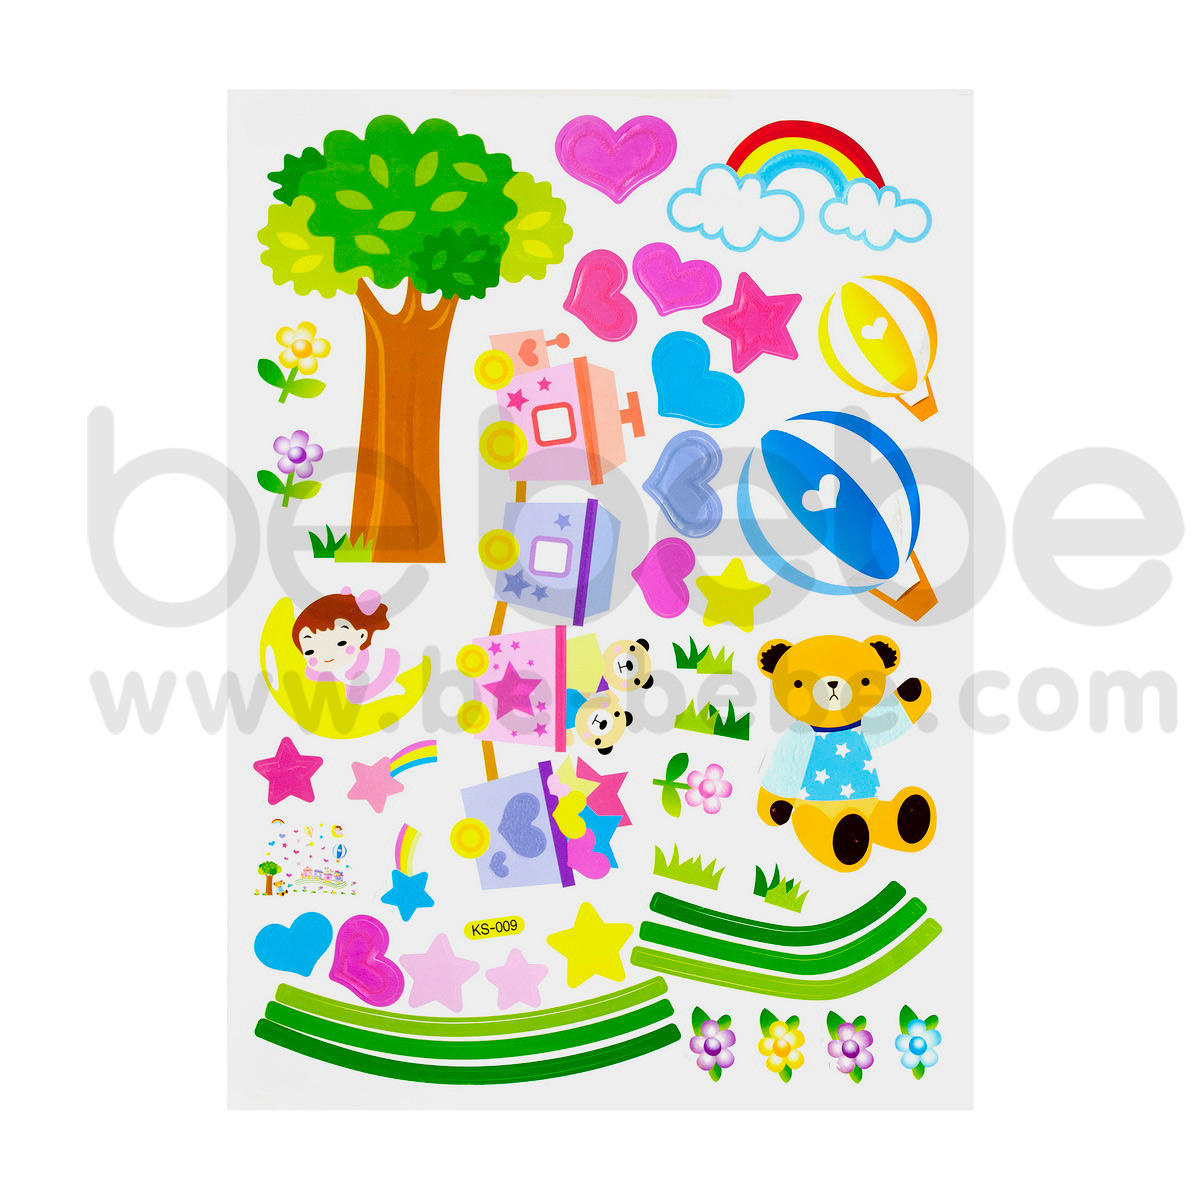 be bebe :Luminous Sticker(27.5x38cm.) / KS-009 